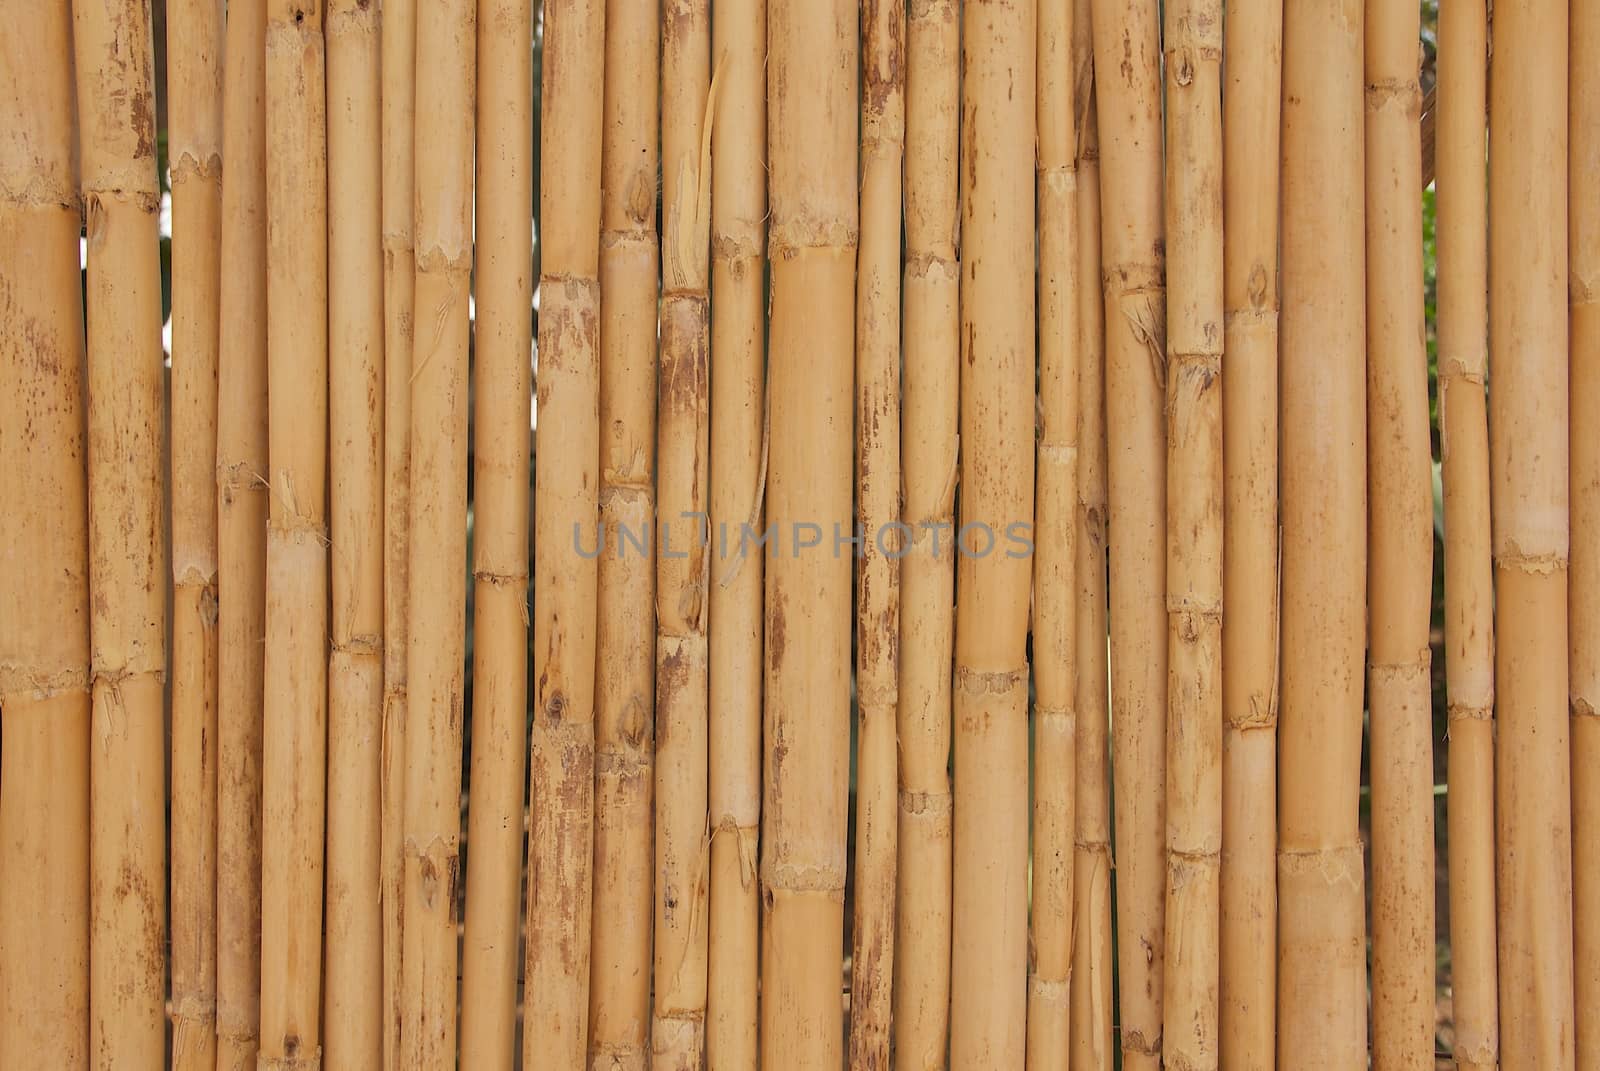 Dried bamboo sticks - background